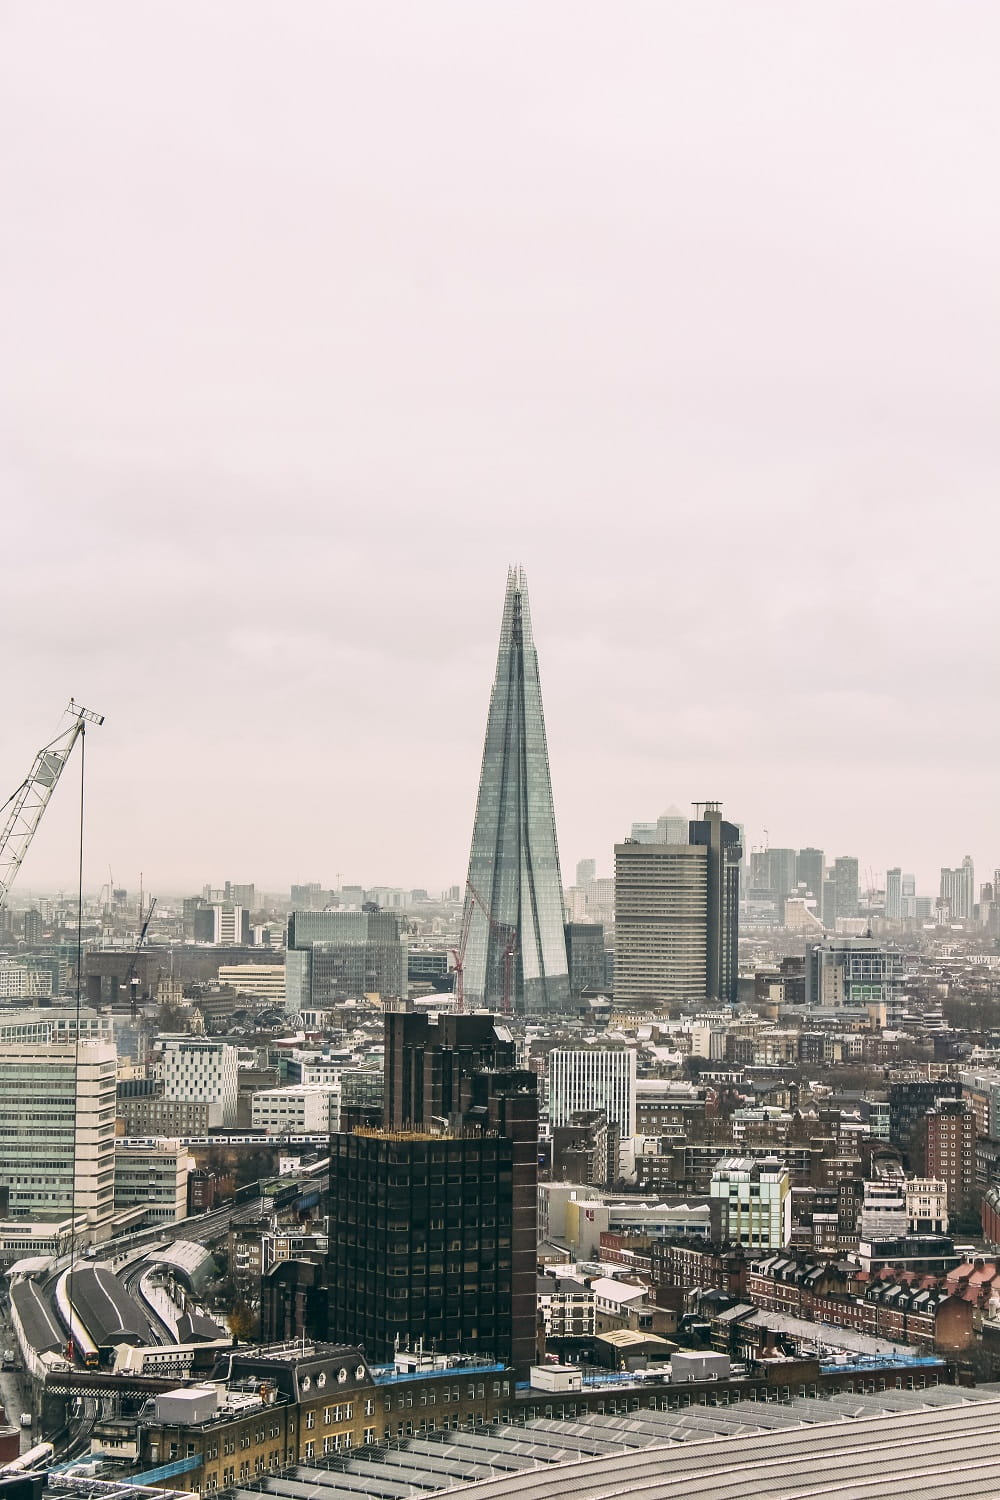 London Eye, London, United Kingdom - Photographer Oscar Blair